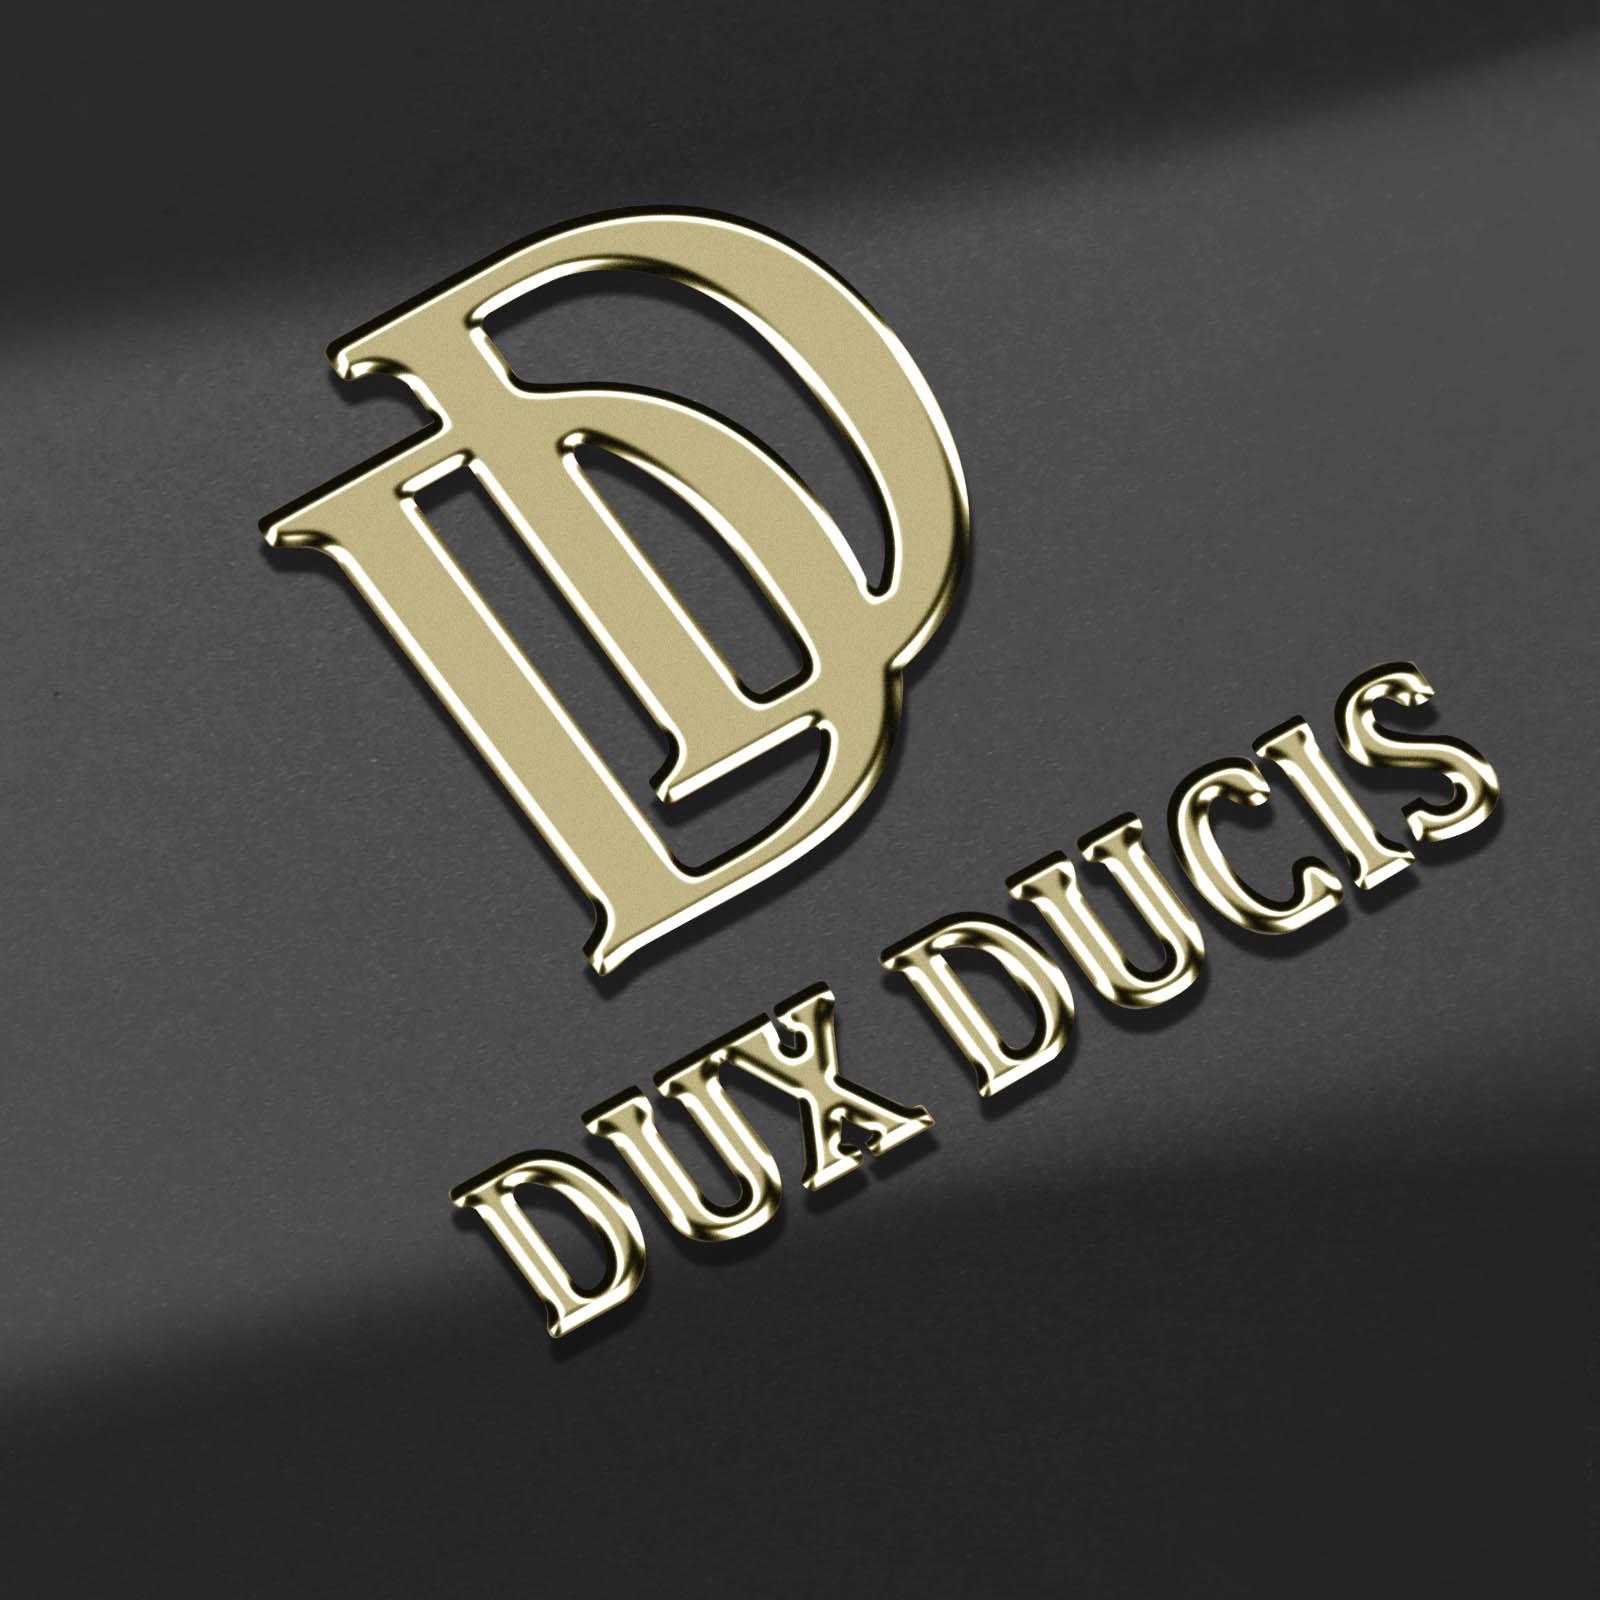 DUX DUCIS Xperia Touch Oberfläche, Soft Schwarz für Series, V, 5 Sony, Extrafach Karte Bookcover